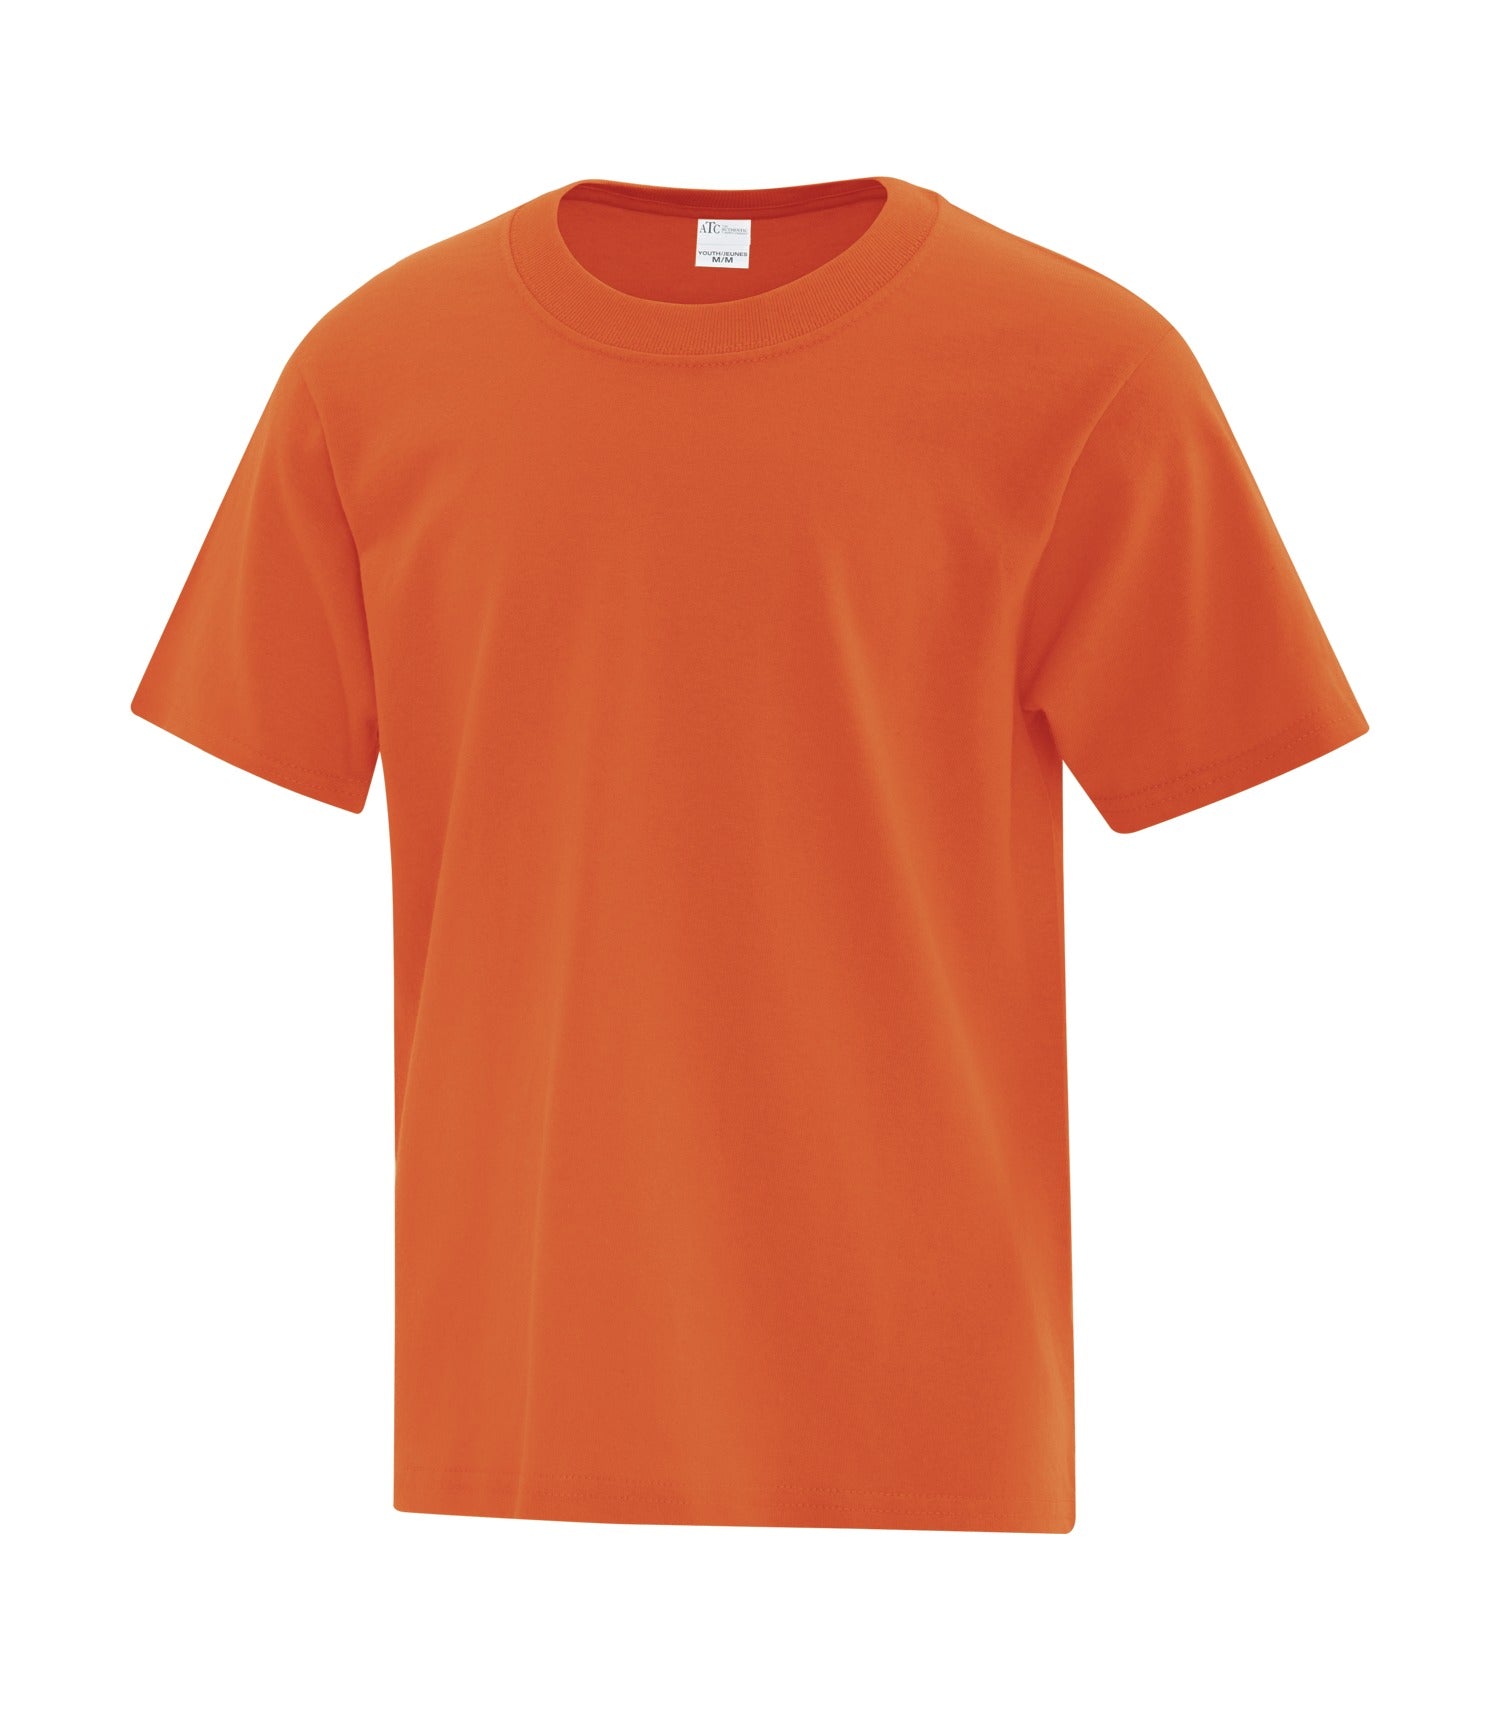 orange t-shirt cotton 